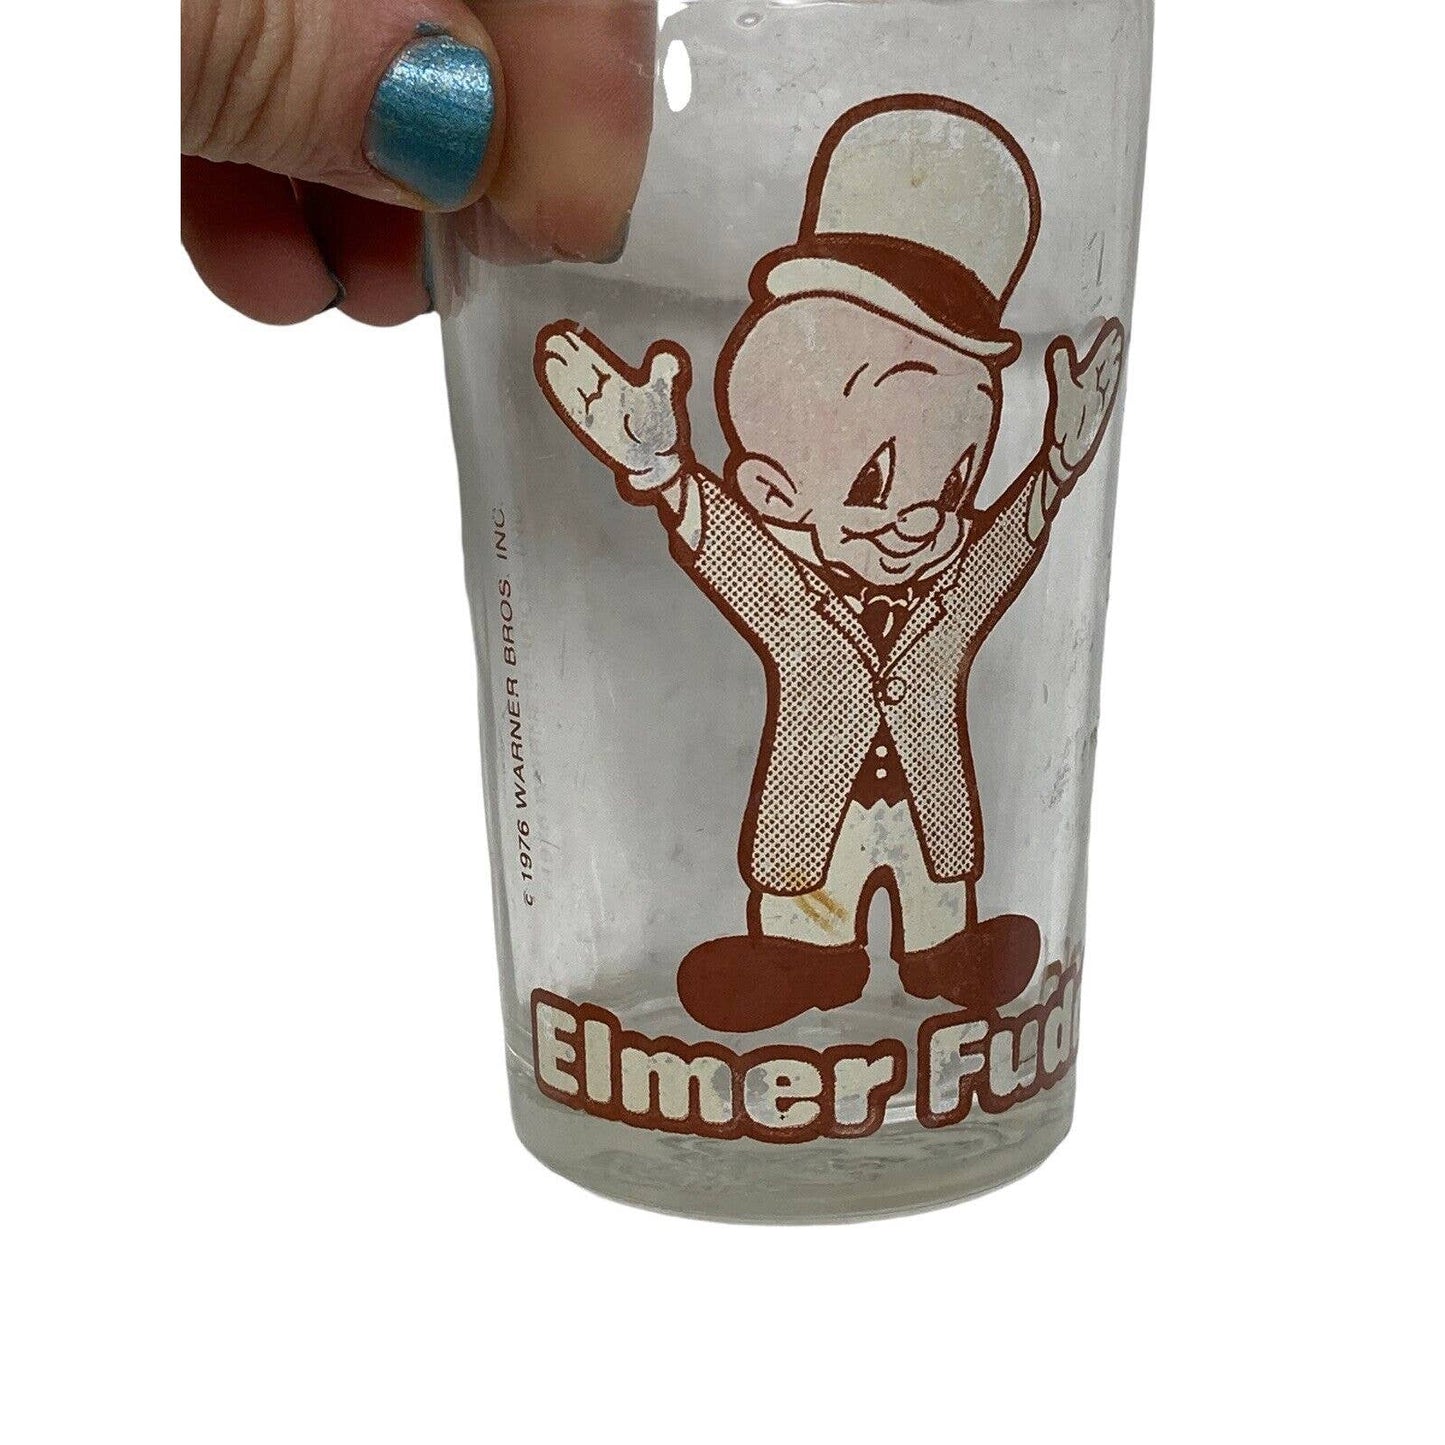 Warner Brothers Looney Tunes Elmer Fudd Promotional Drinking Glass Porky bottom